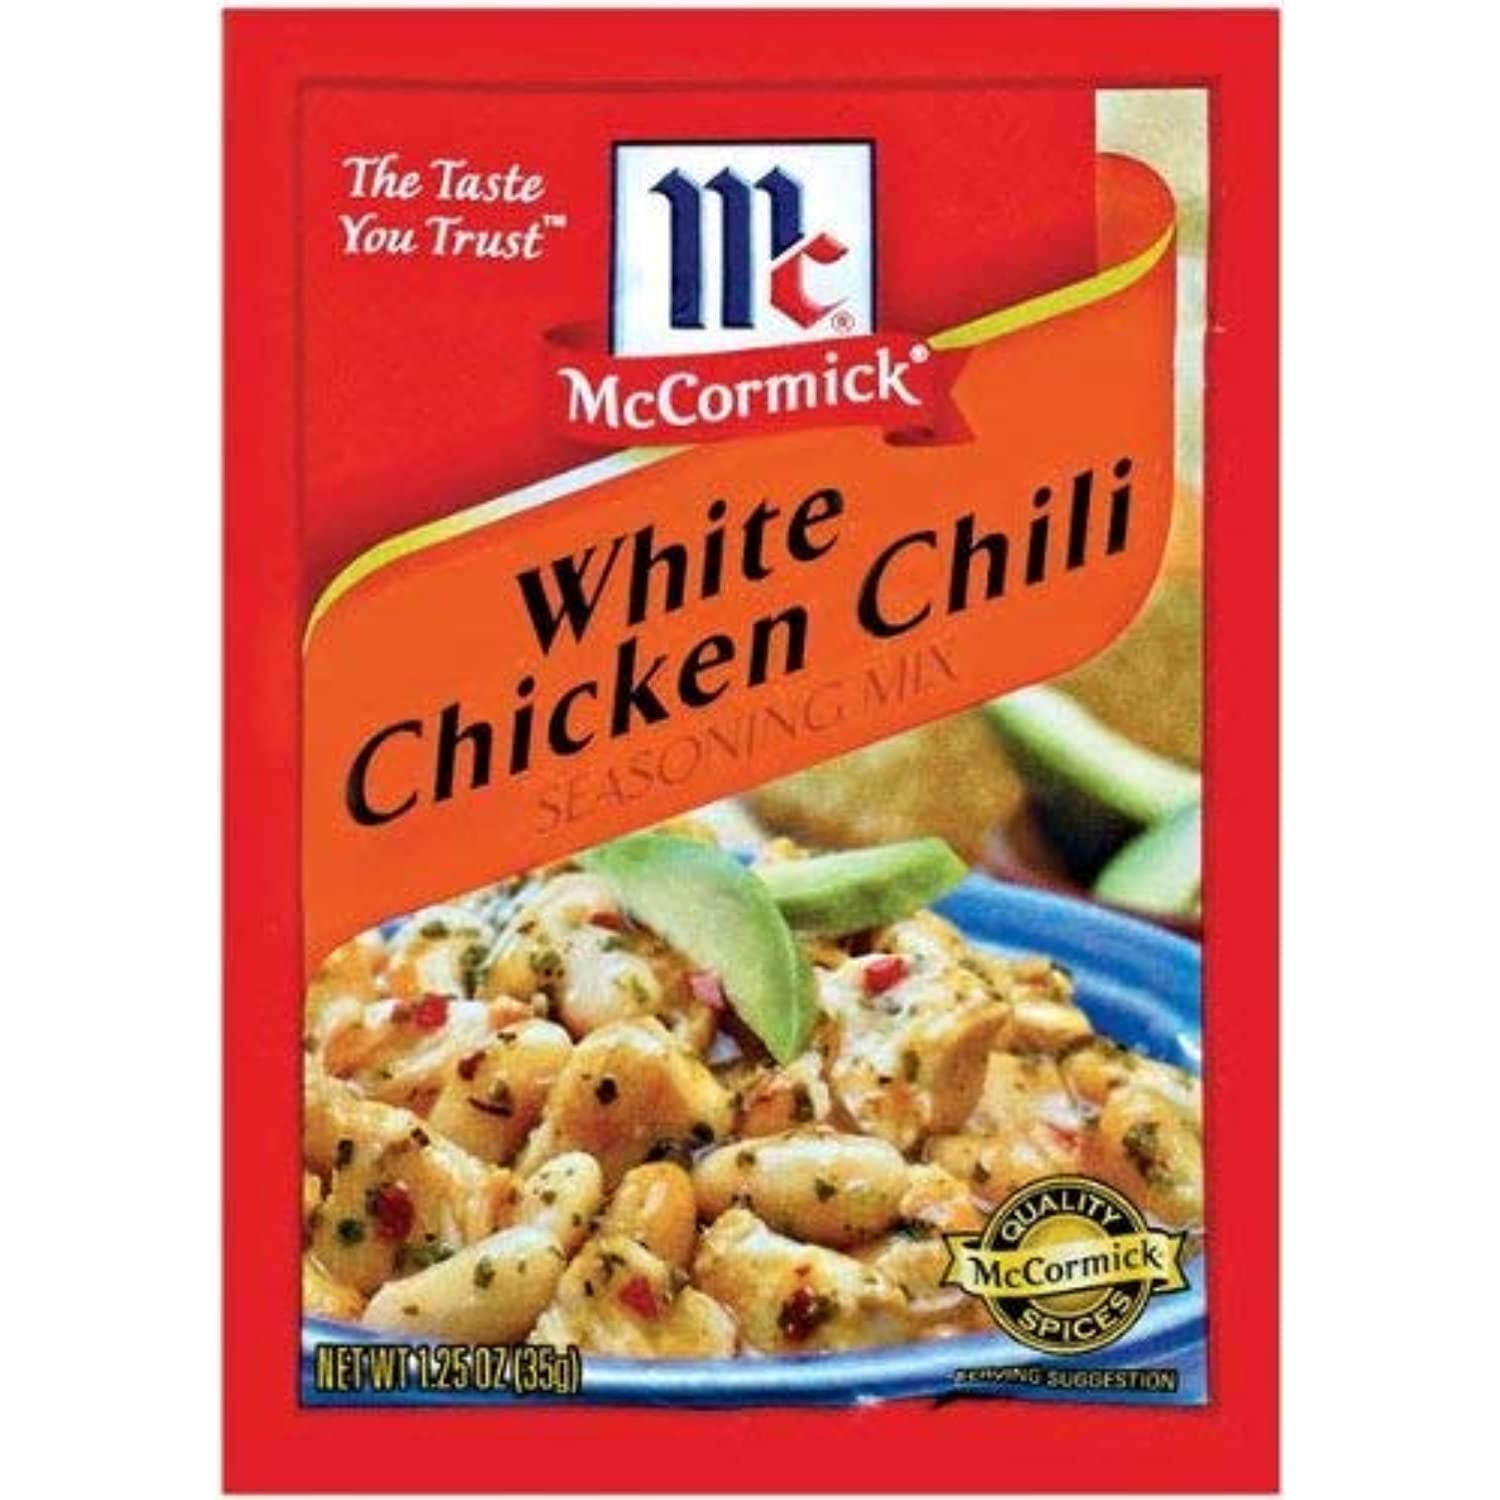 McCormick White Chicken Chili Seasoning Spice Mix 1.25 oz 6-pack Free Ship